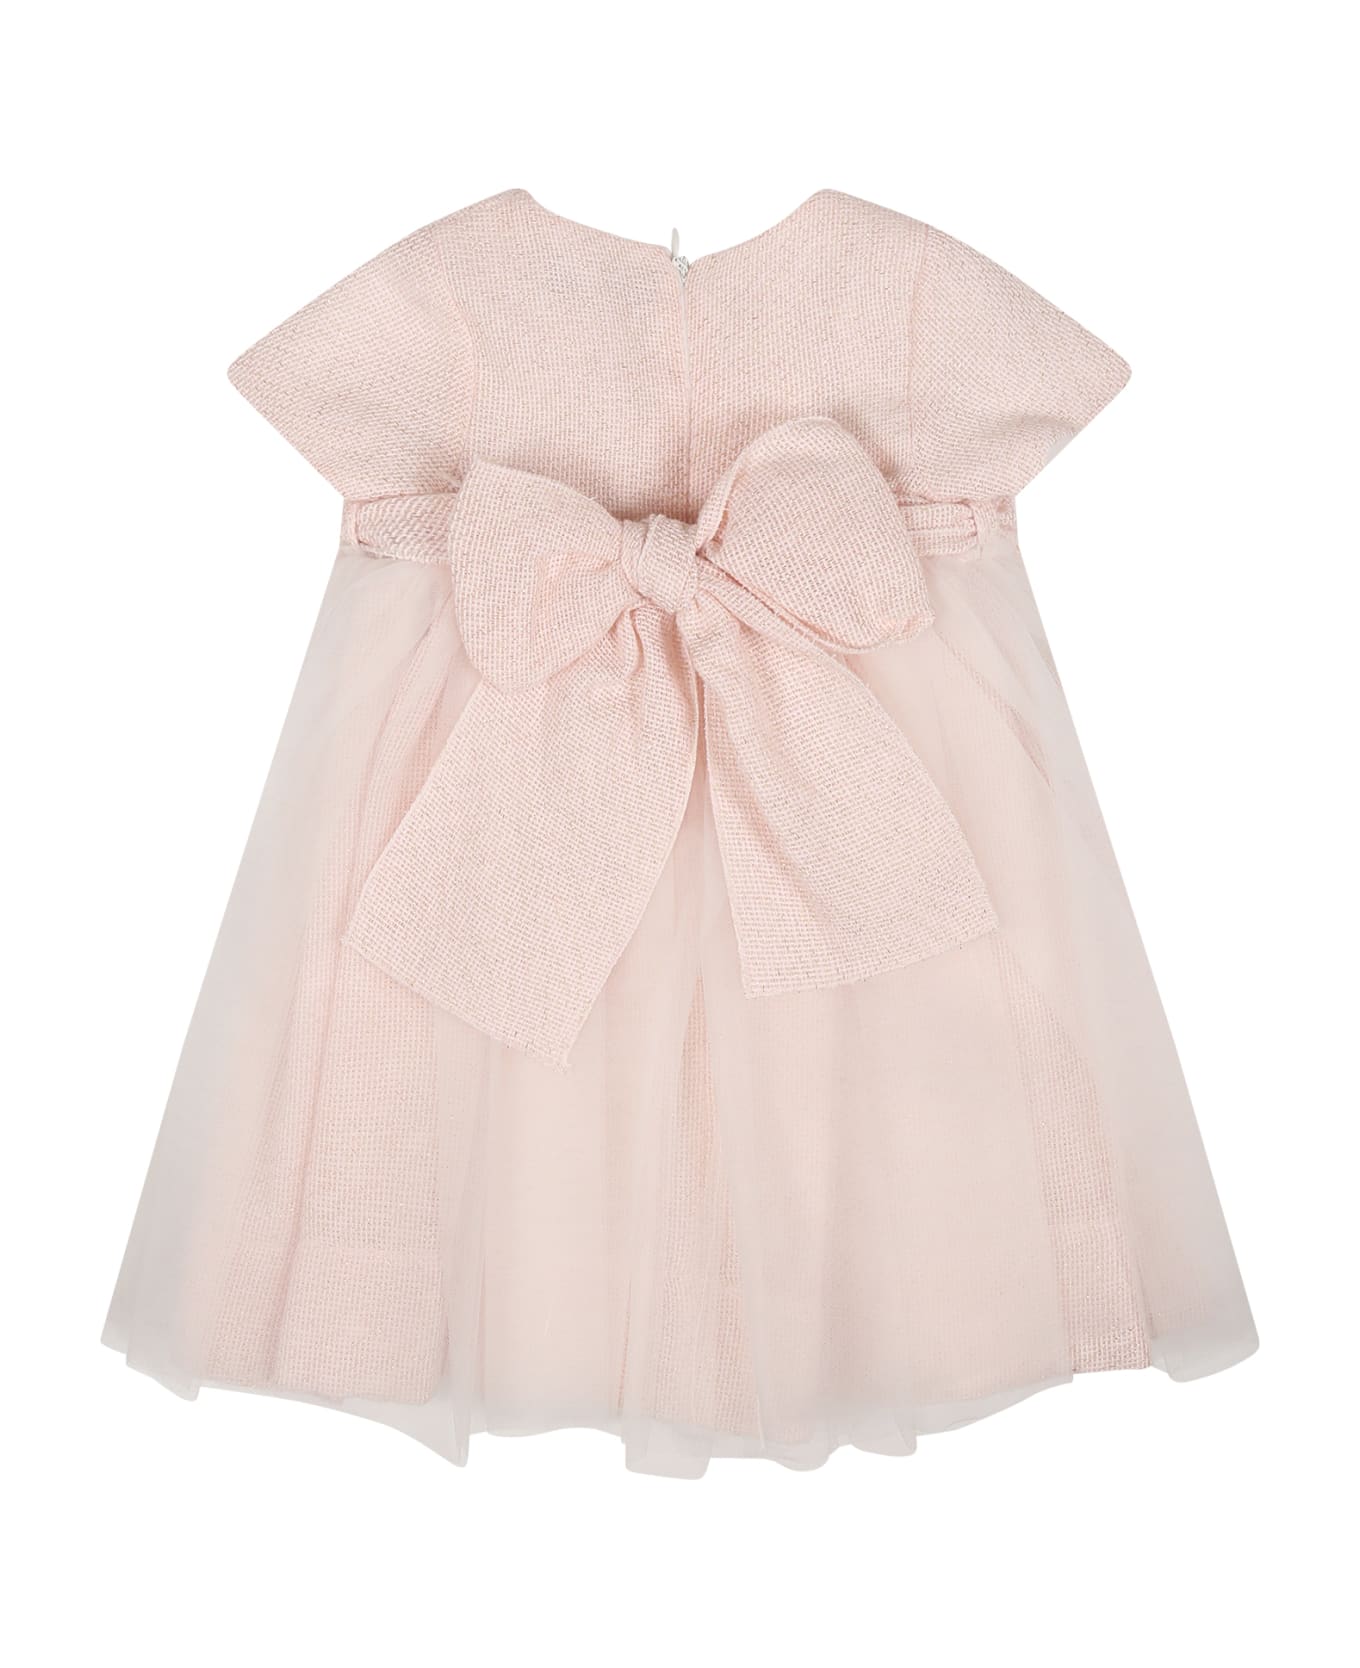 Little Bear Pink Dress For Baby Girl - Pink ウェア